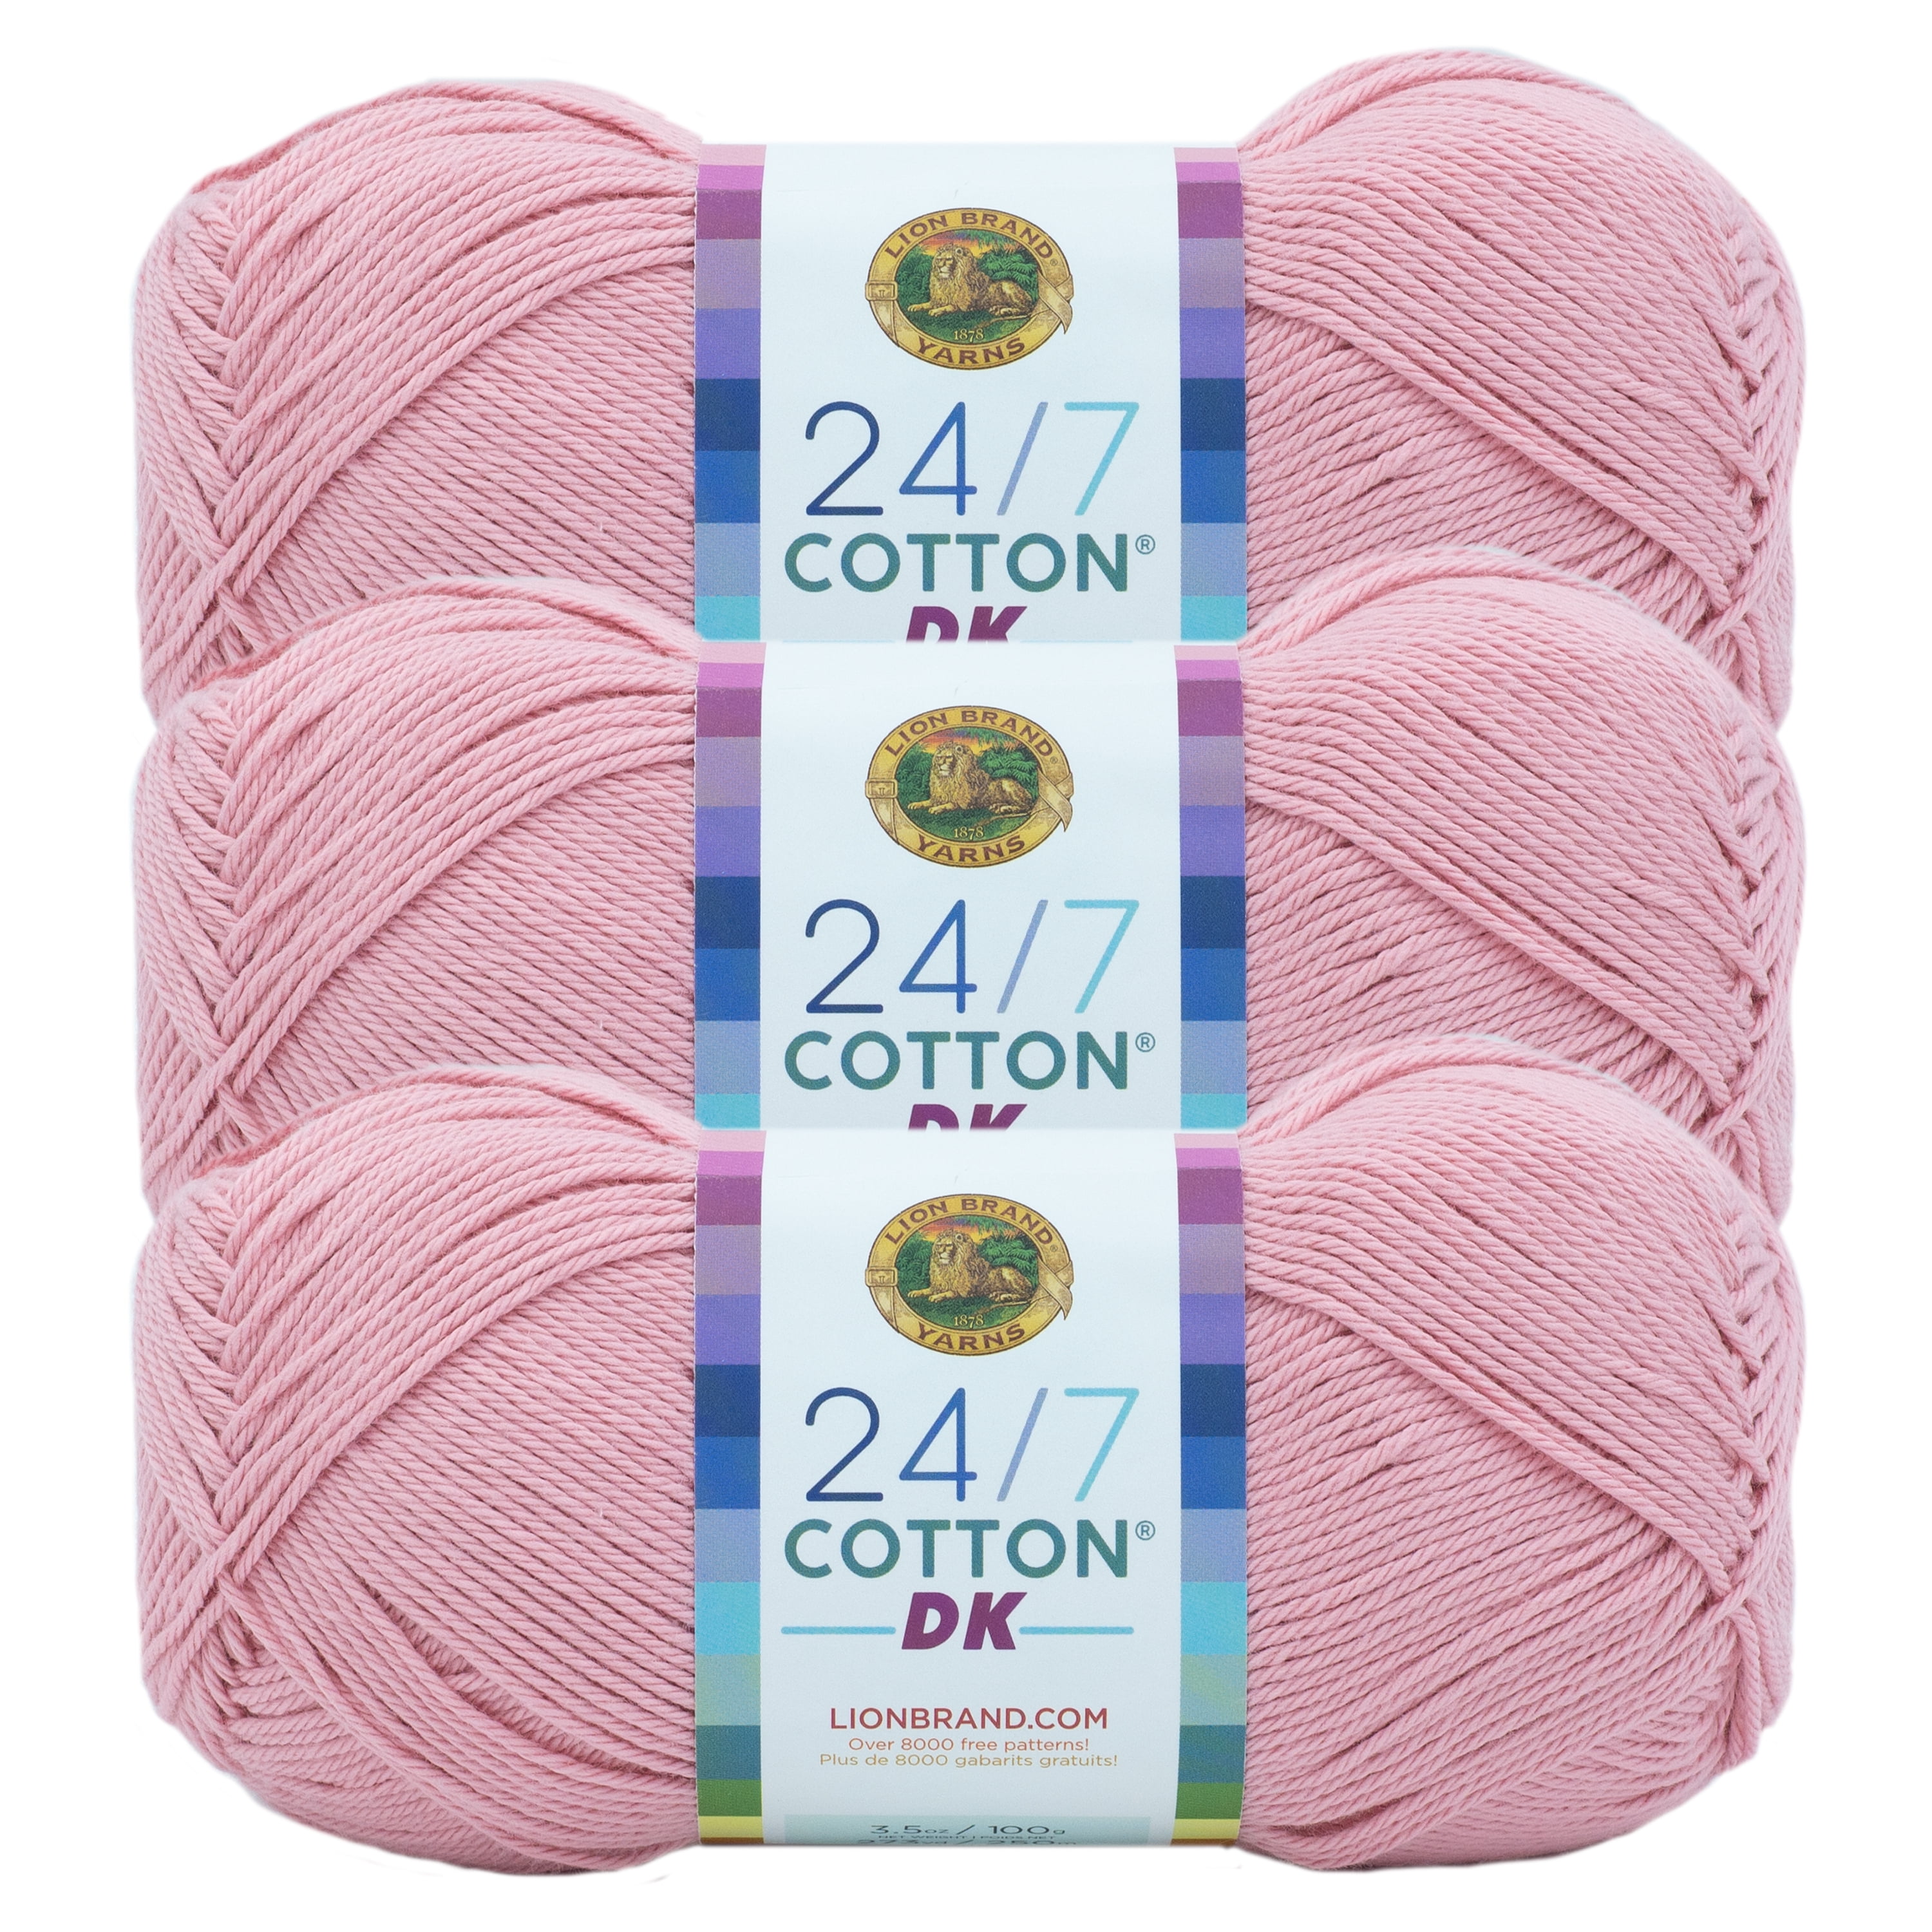 Lion Brand Yarn 24/7 Cotton DK Sugarcane Light Cotton White Yarn 3 Pack 